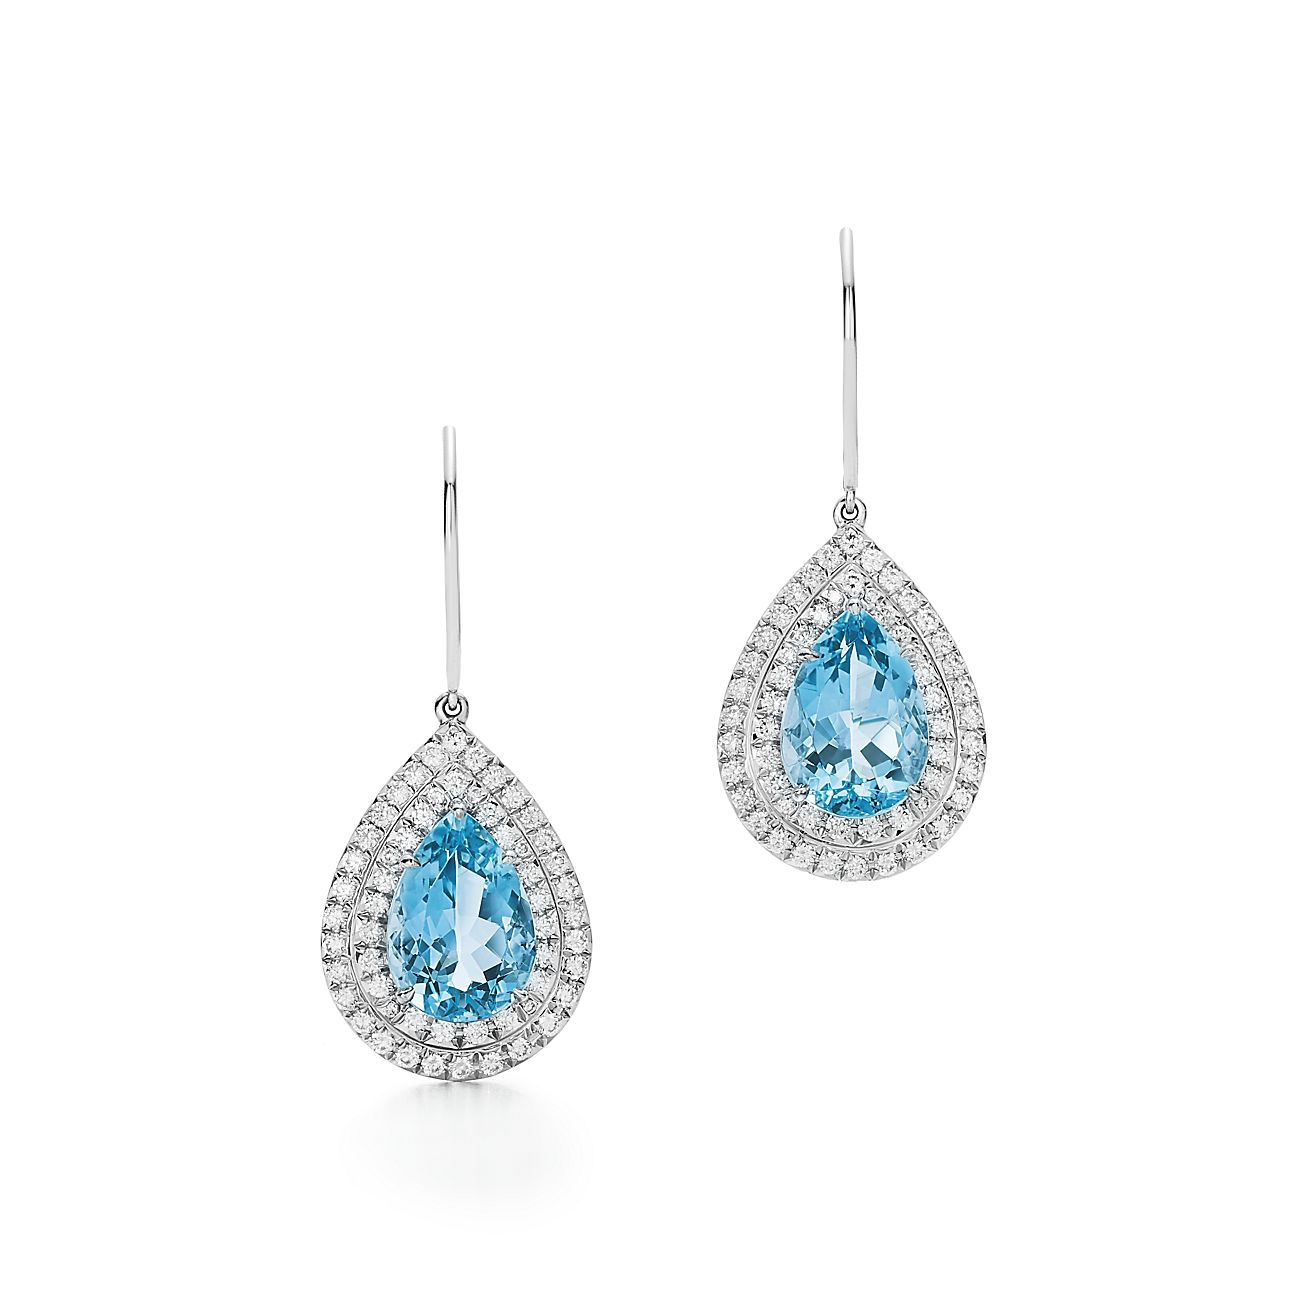 Tiffany Soleste earrings in platinum with diamonds and aquamarines ...